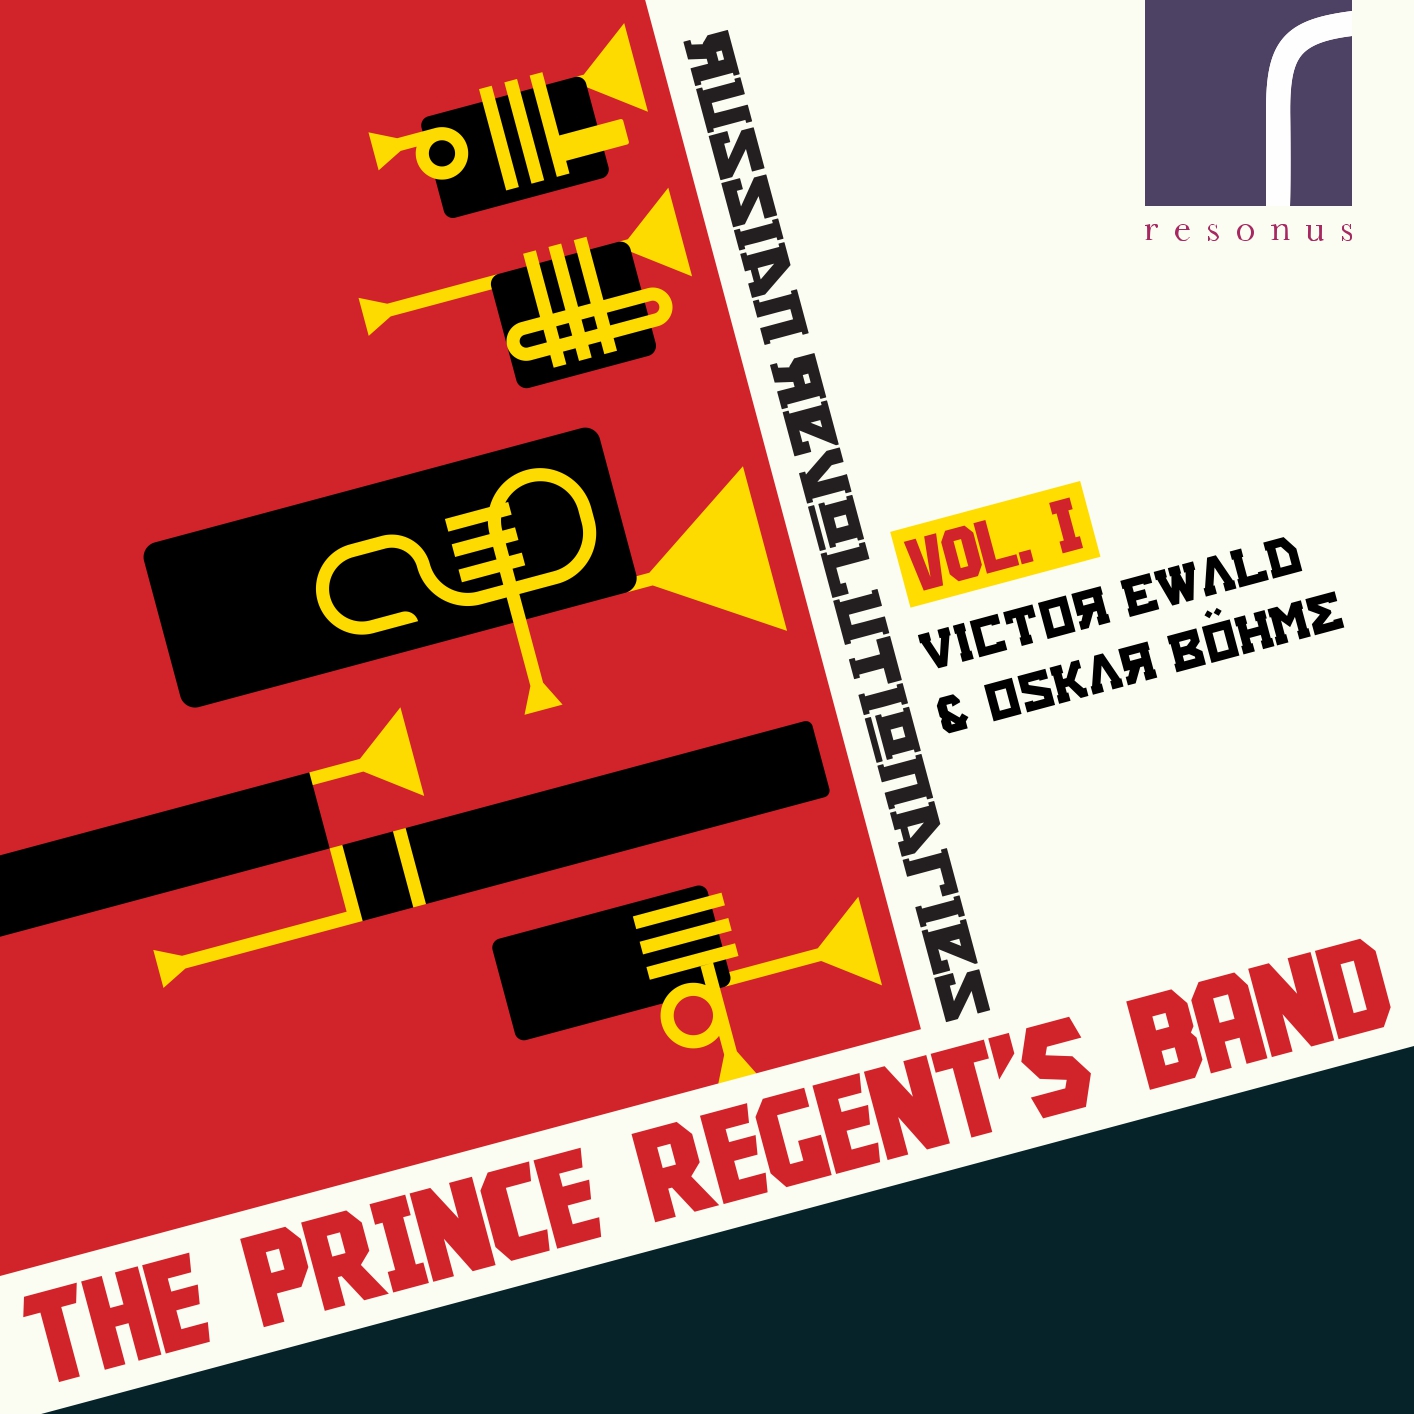 The Prince Regent’s Band – Russian Revolutionaries, Vol. 1: Victor Ewald & Oskar Bohme (2017) [FLAC 24bit/96kHz]